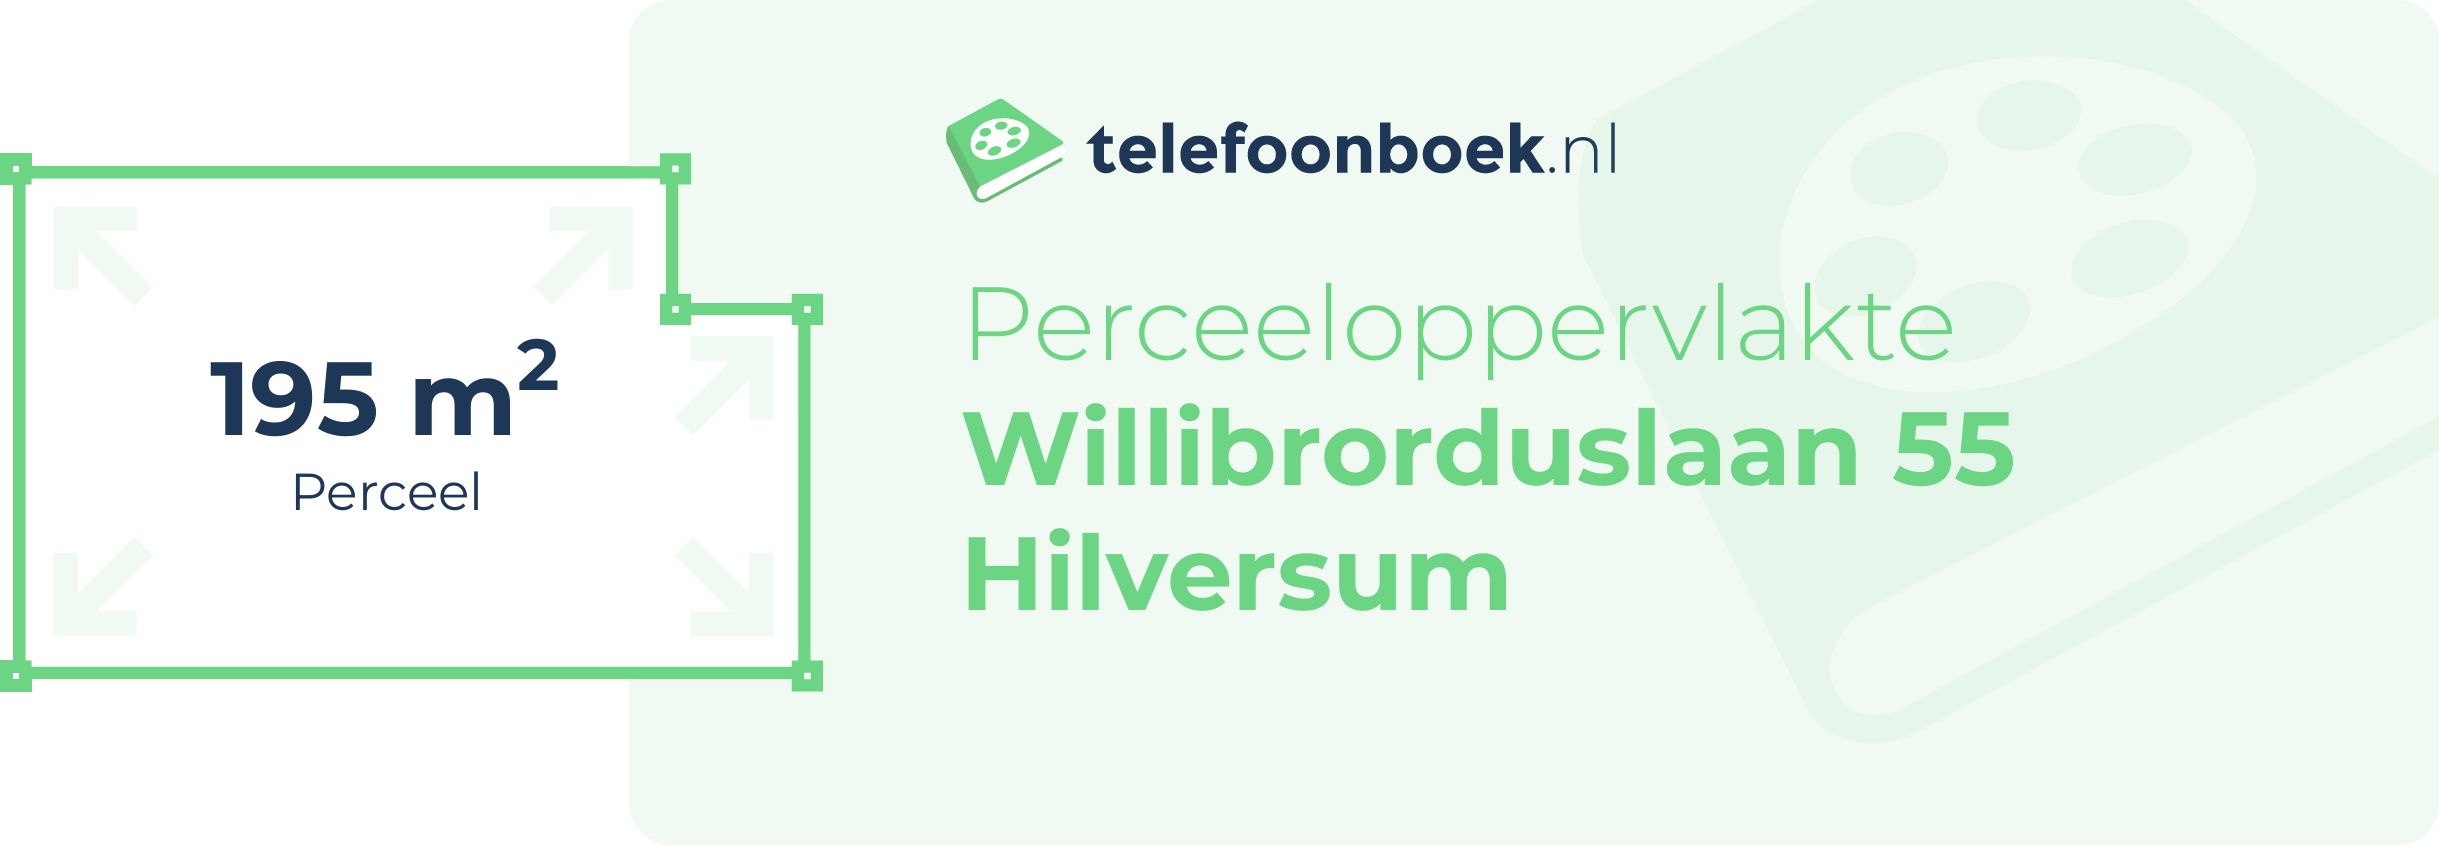 Perceeloppervlakte Willibrorduslaan 55 Hilversum